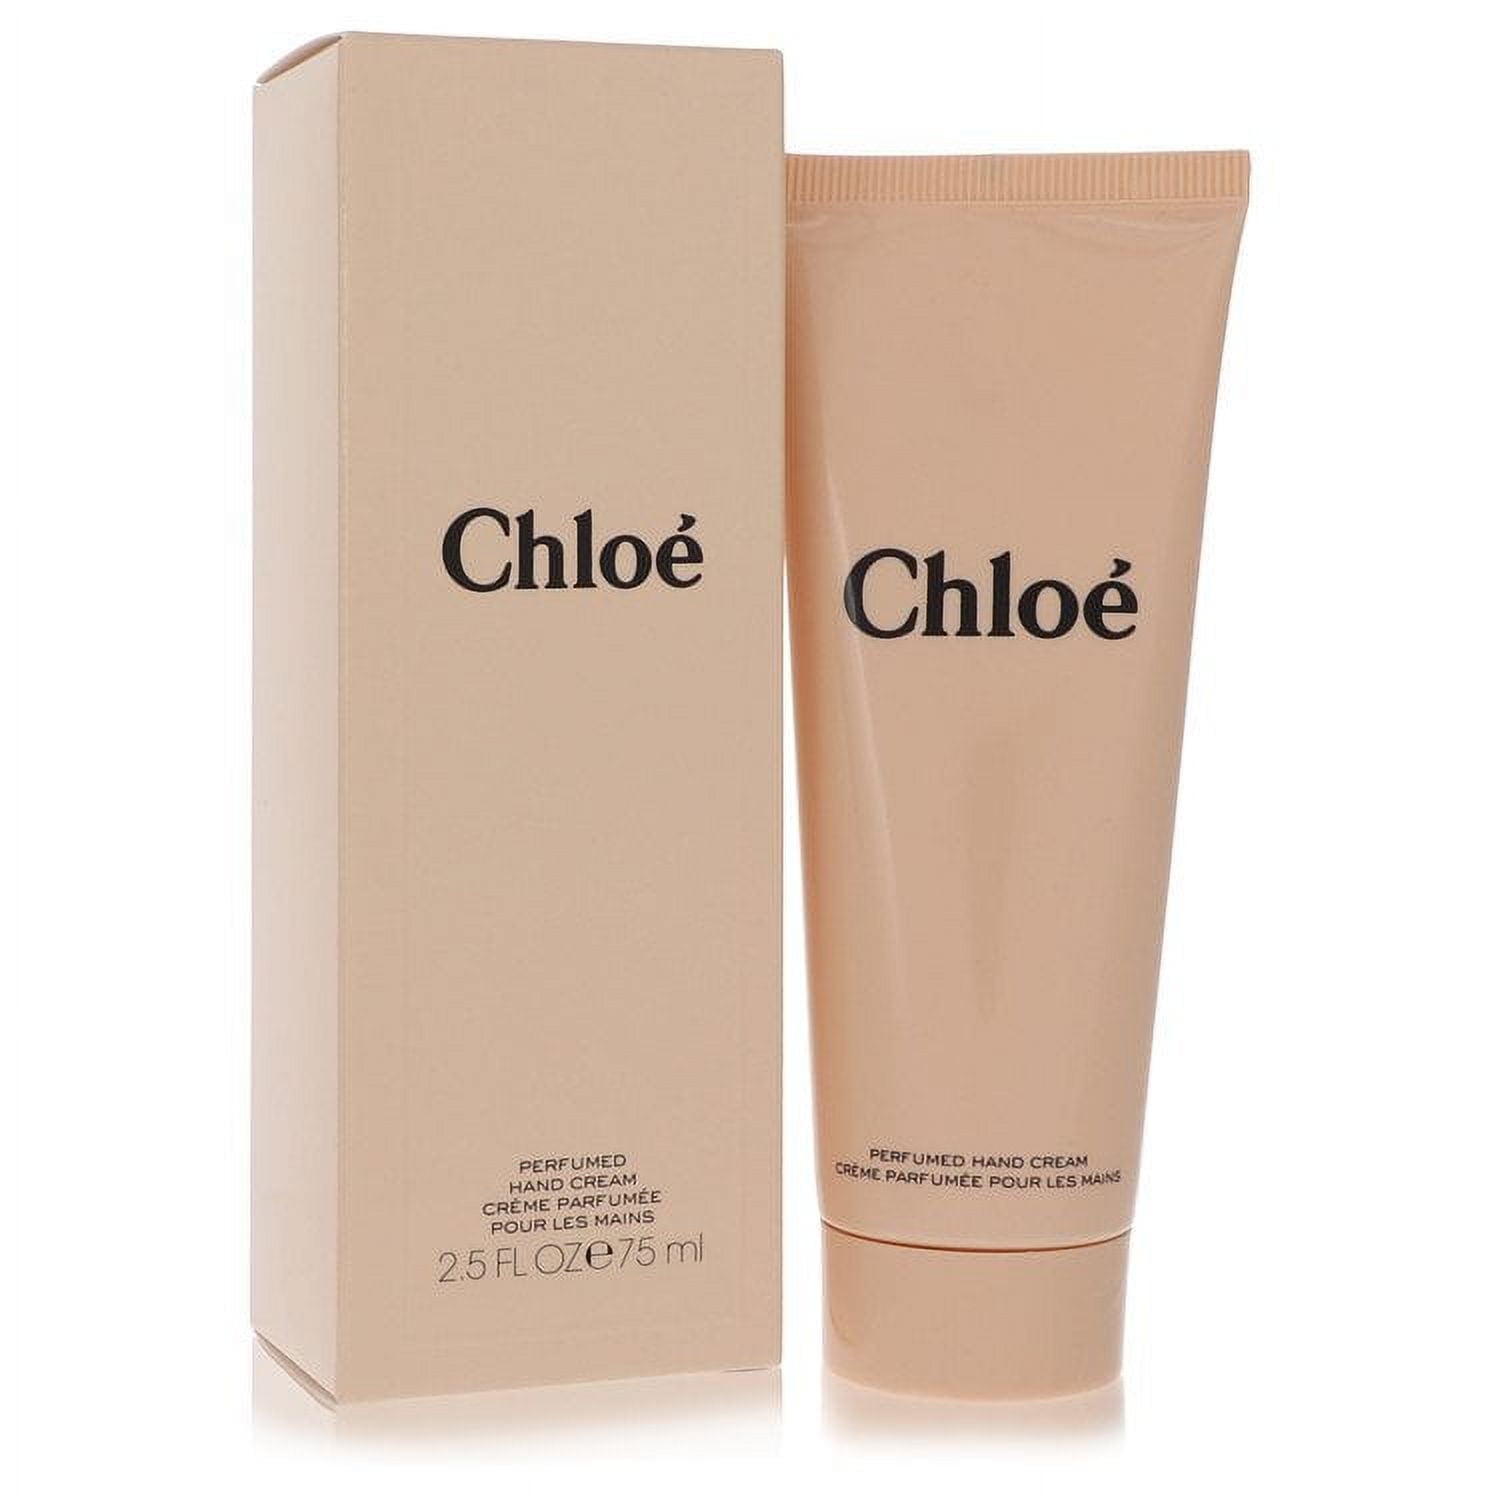 Chloe (New) by Chloe Hand Cream 2.5 oz Pack of 2 - Walmart.com